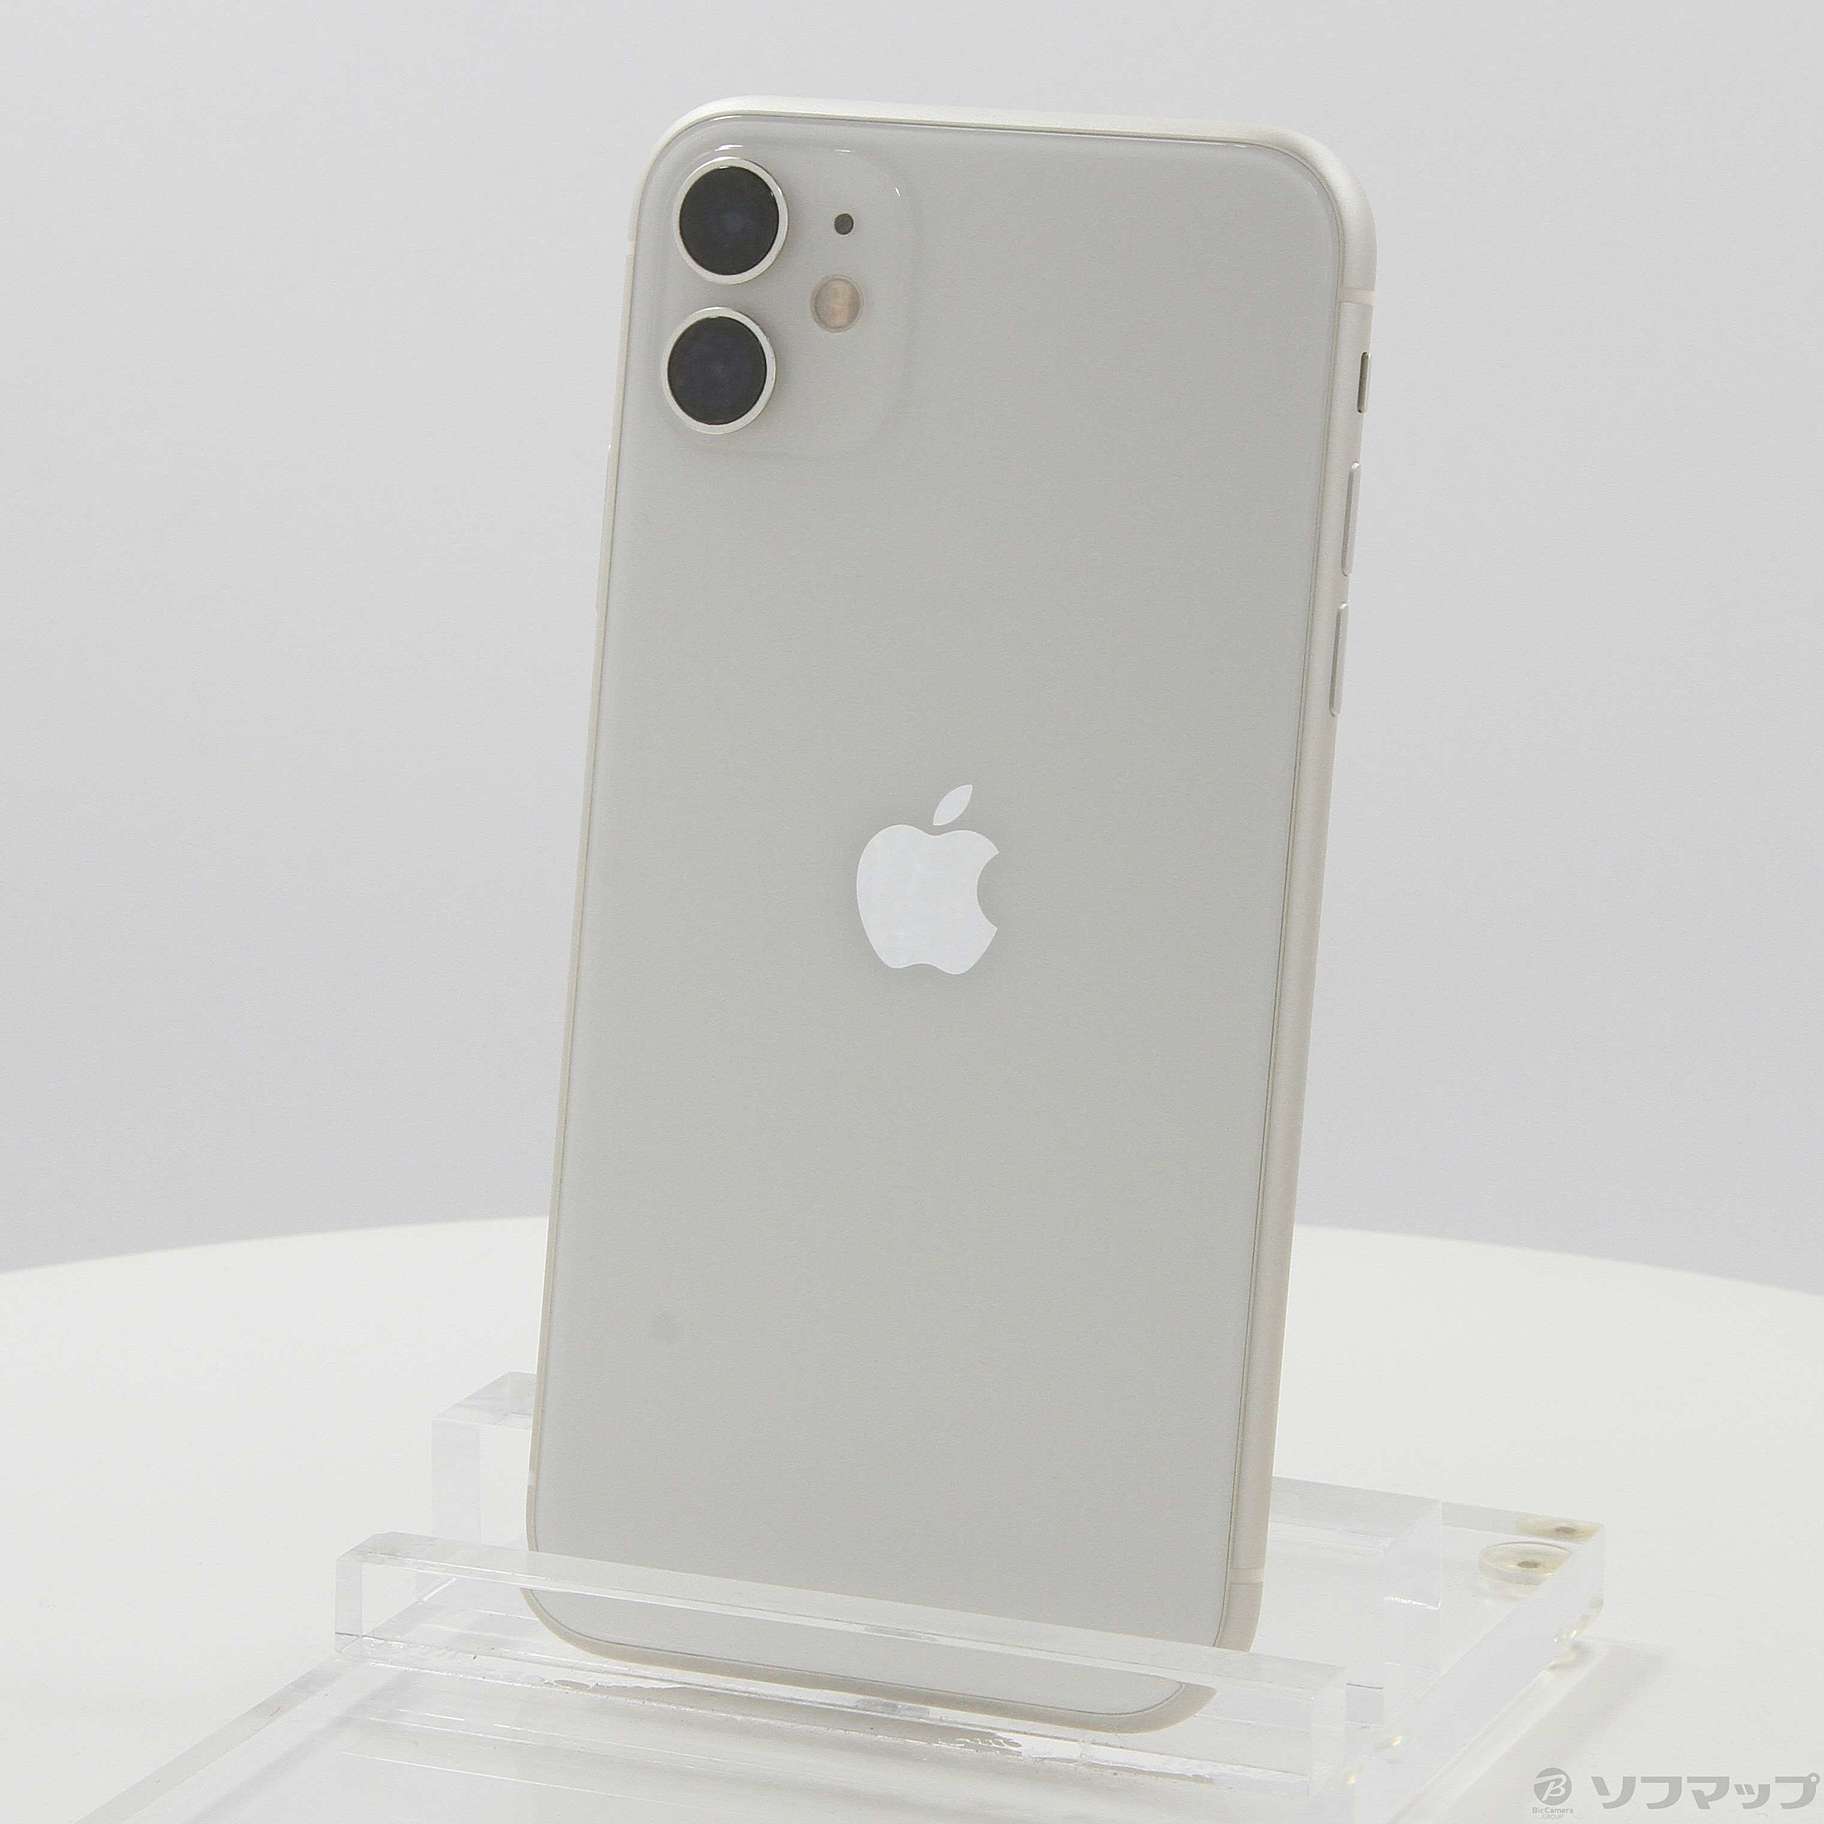 iPhone 11 64GB SIMフリー [ホワイト] 中古(白ロム)価格比較 - 価格.com